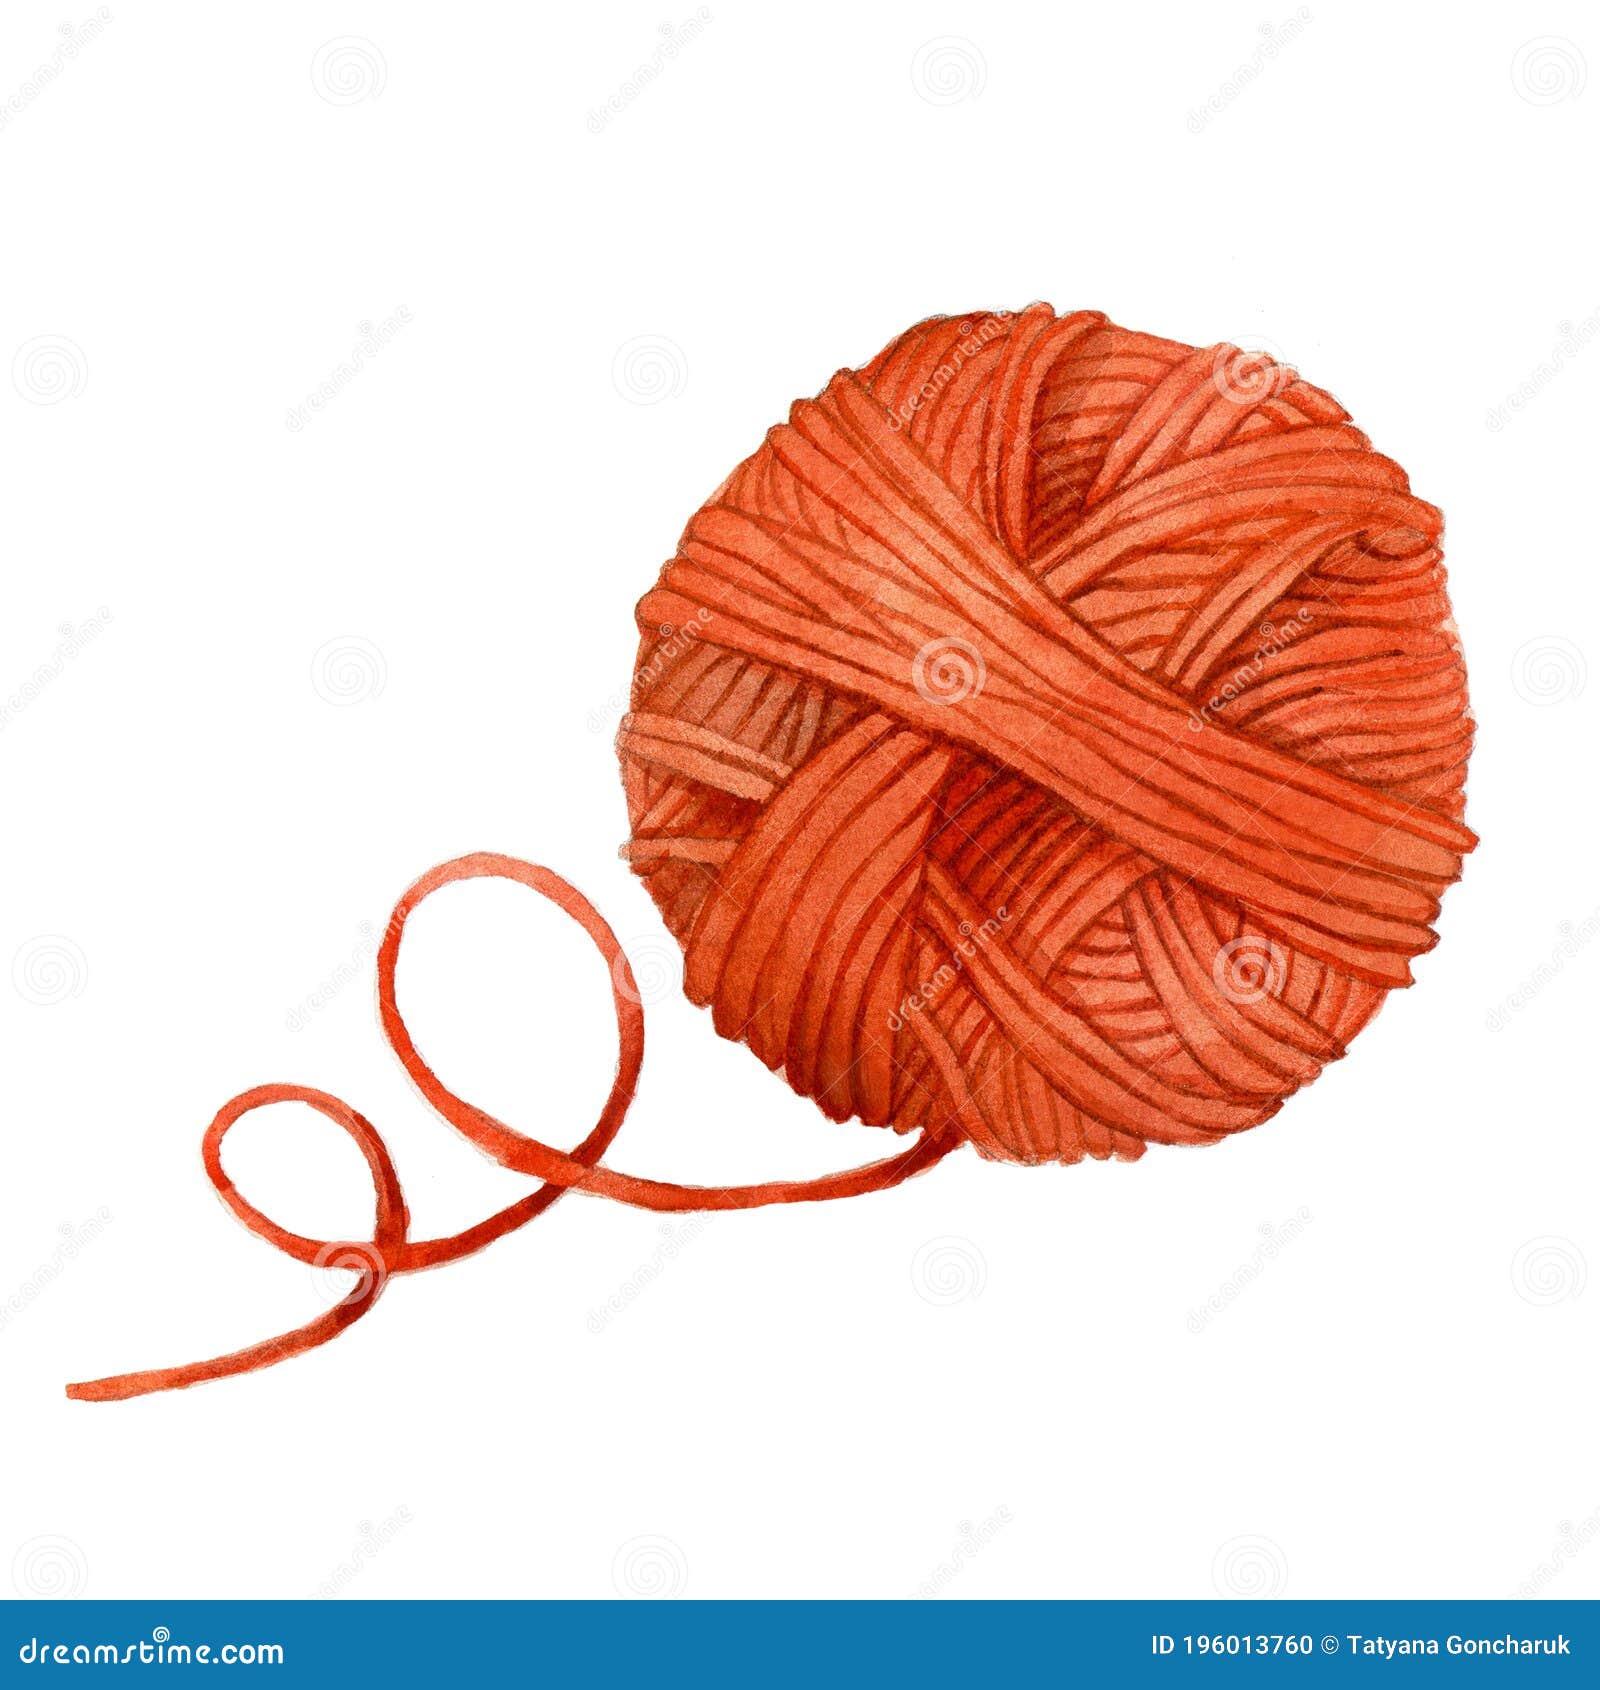 Wool Ball Hand Knitting Wool Colour Mouse Grey Yarn Thread